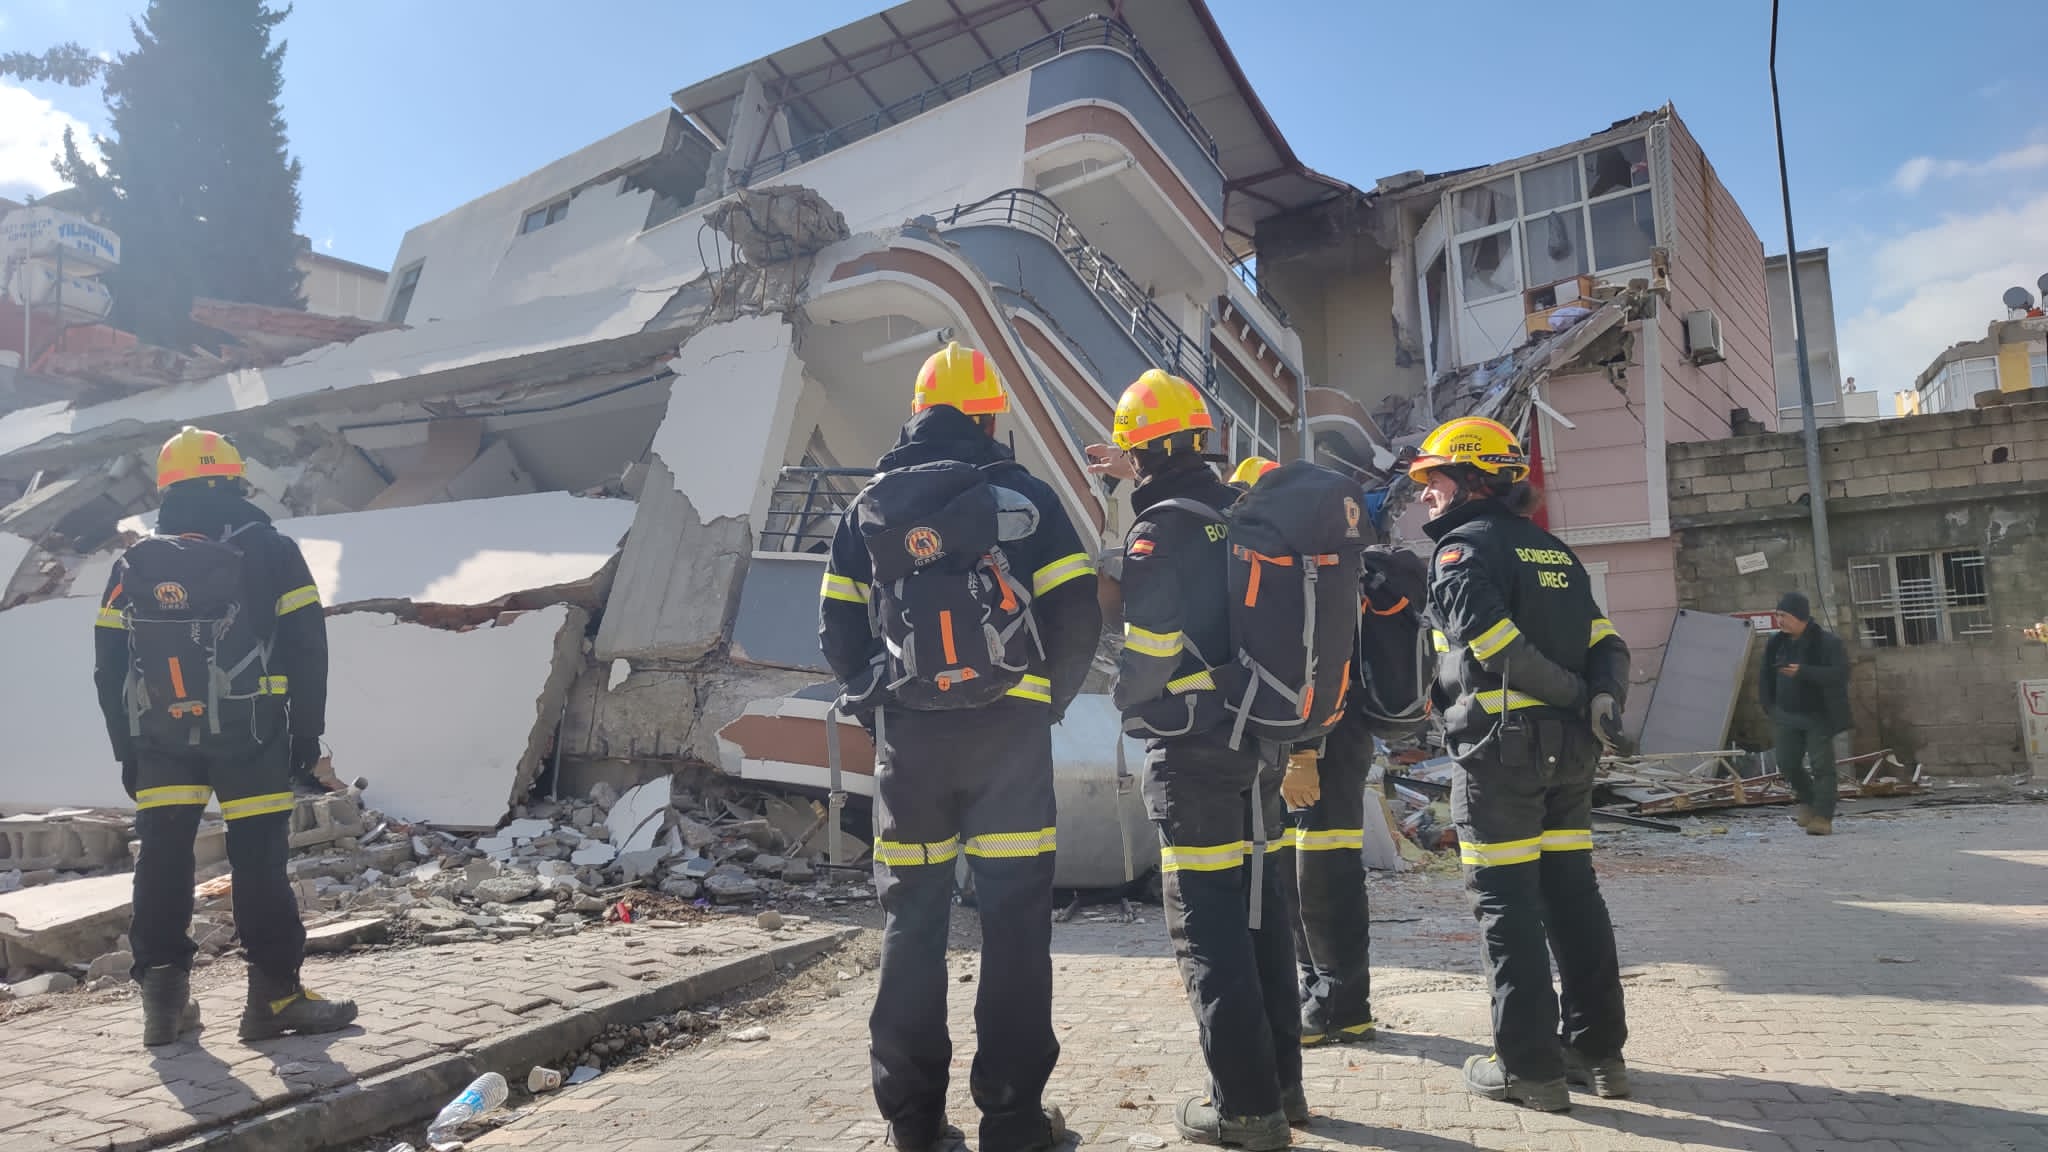 El torrentino Christian Andreu, miembro del Parque de Bomberos de Torrent, rescata a dos personas tras el terremoto de Turquía